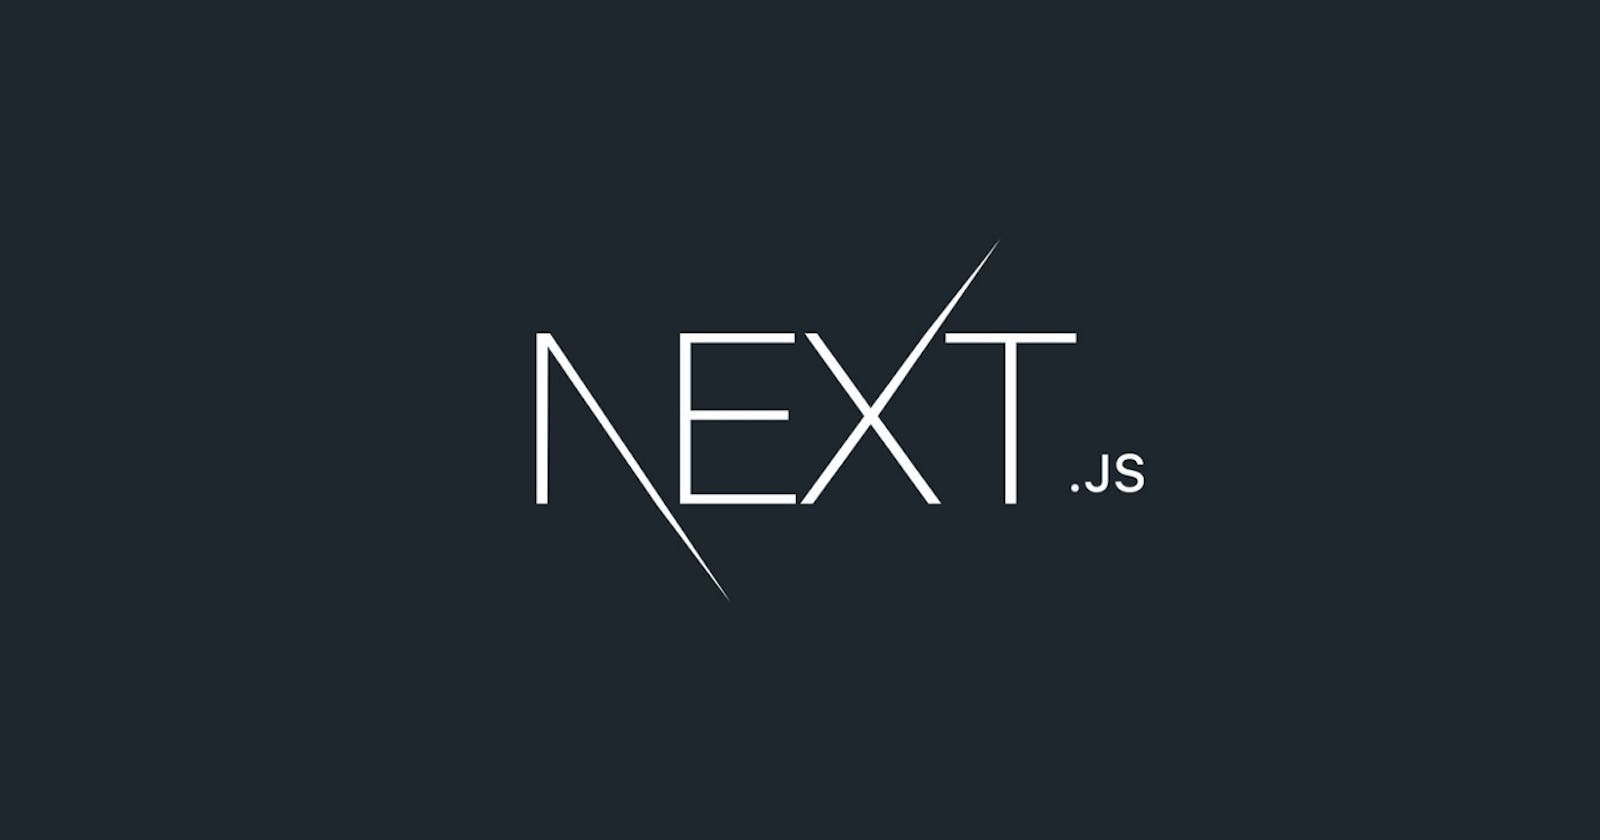 Deploying a NextJS app directly via the build process